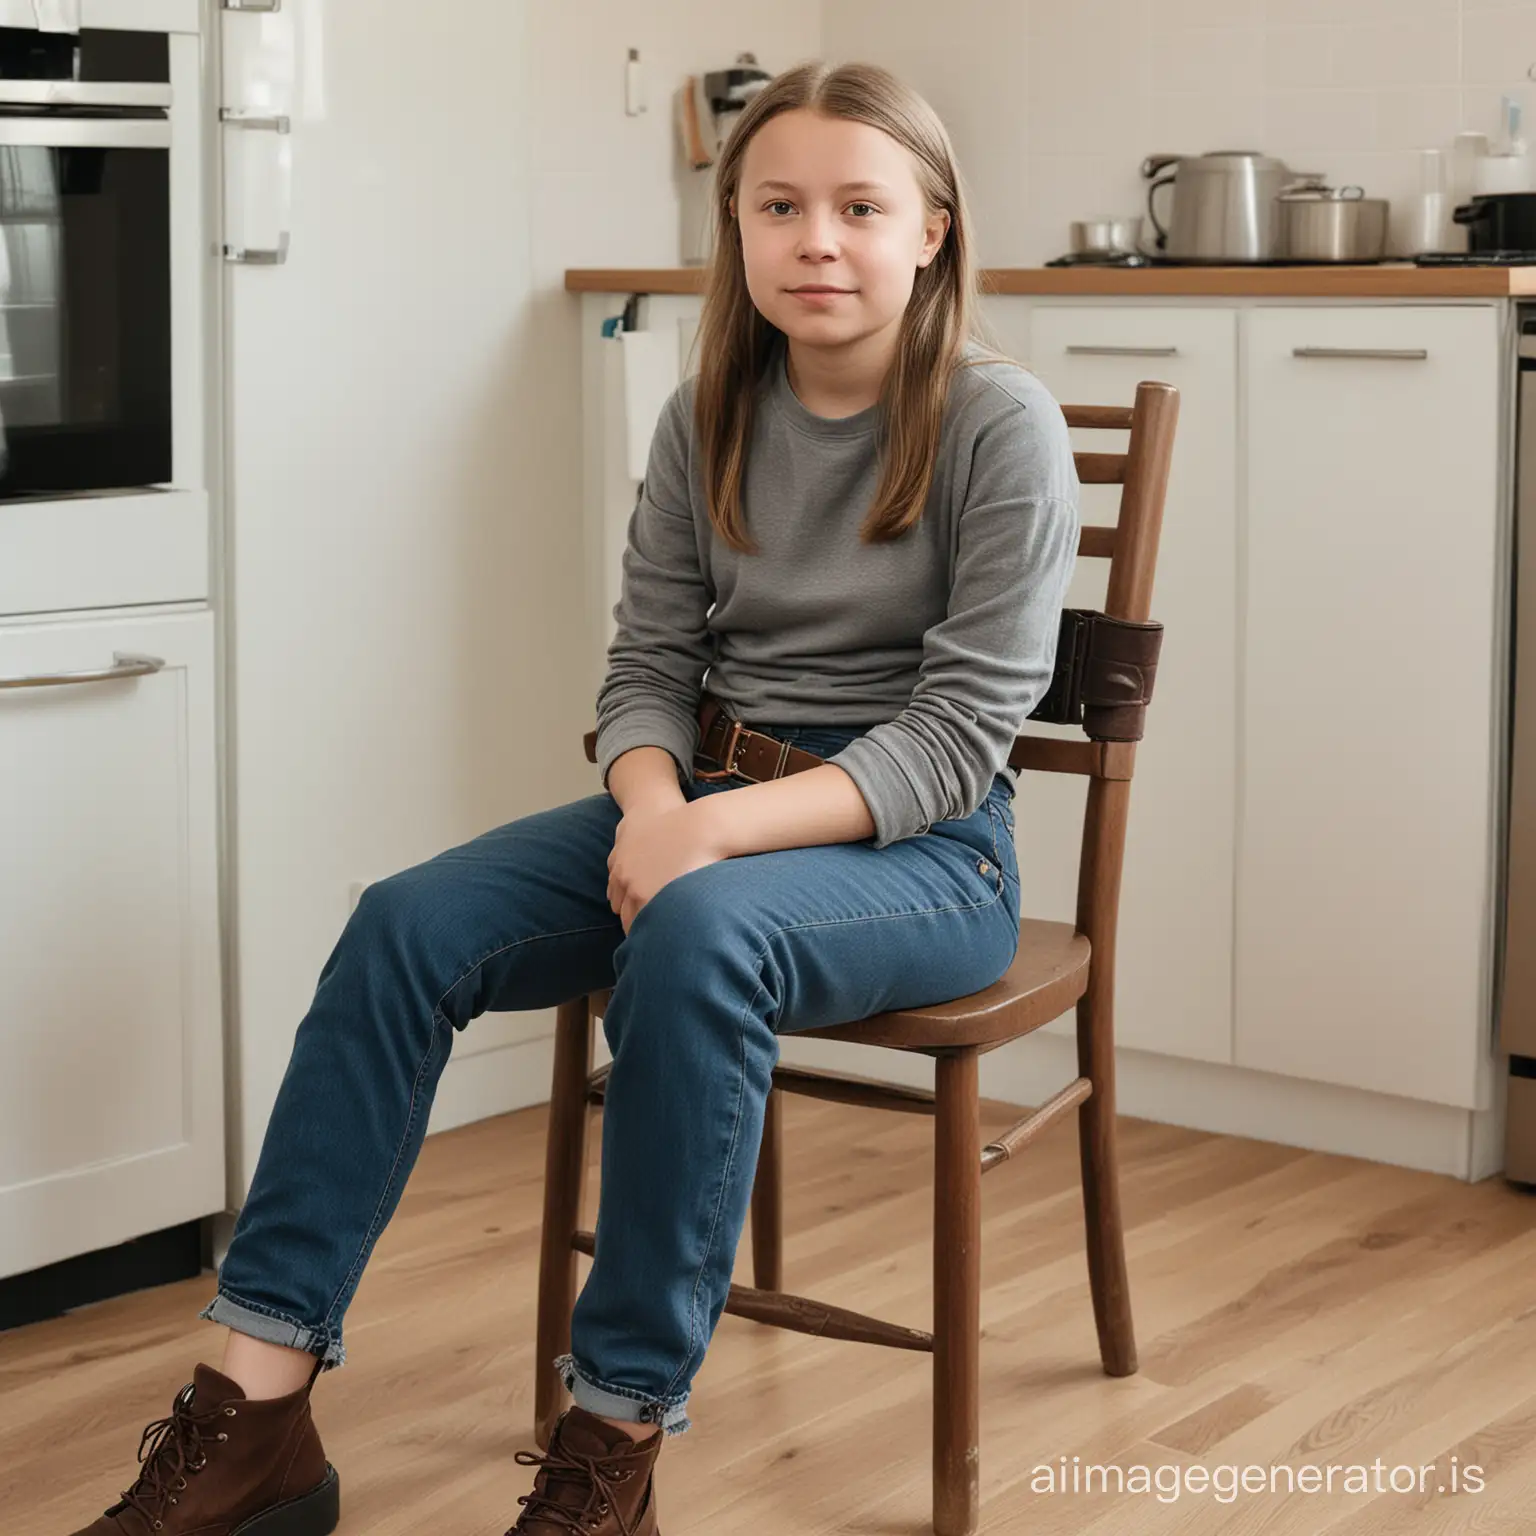 Greta-Thunberg-Sitting-Sternly-in-Kitchen-Environment